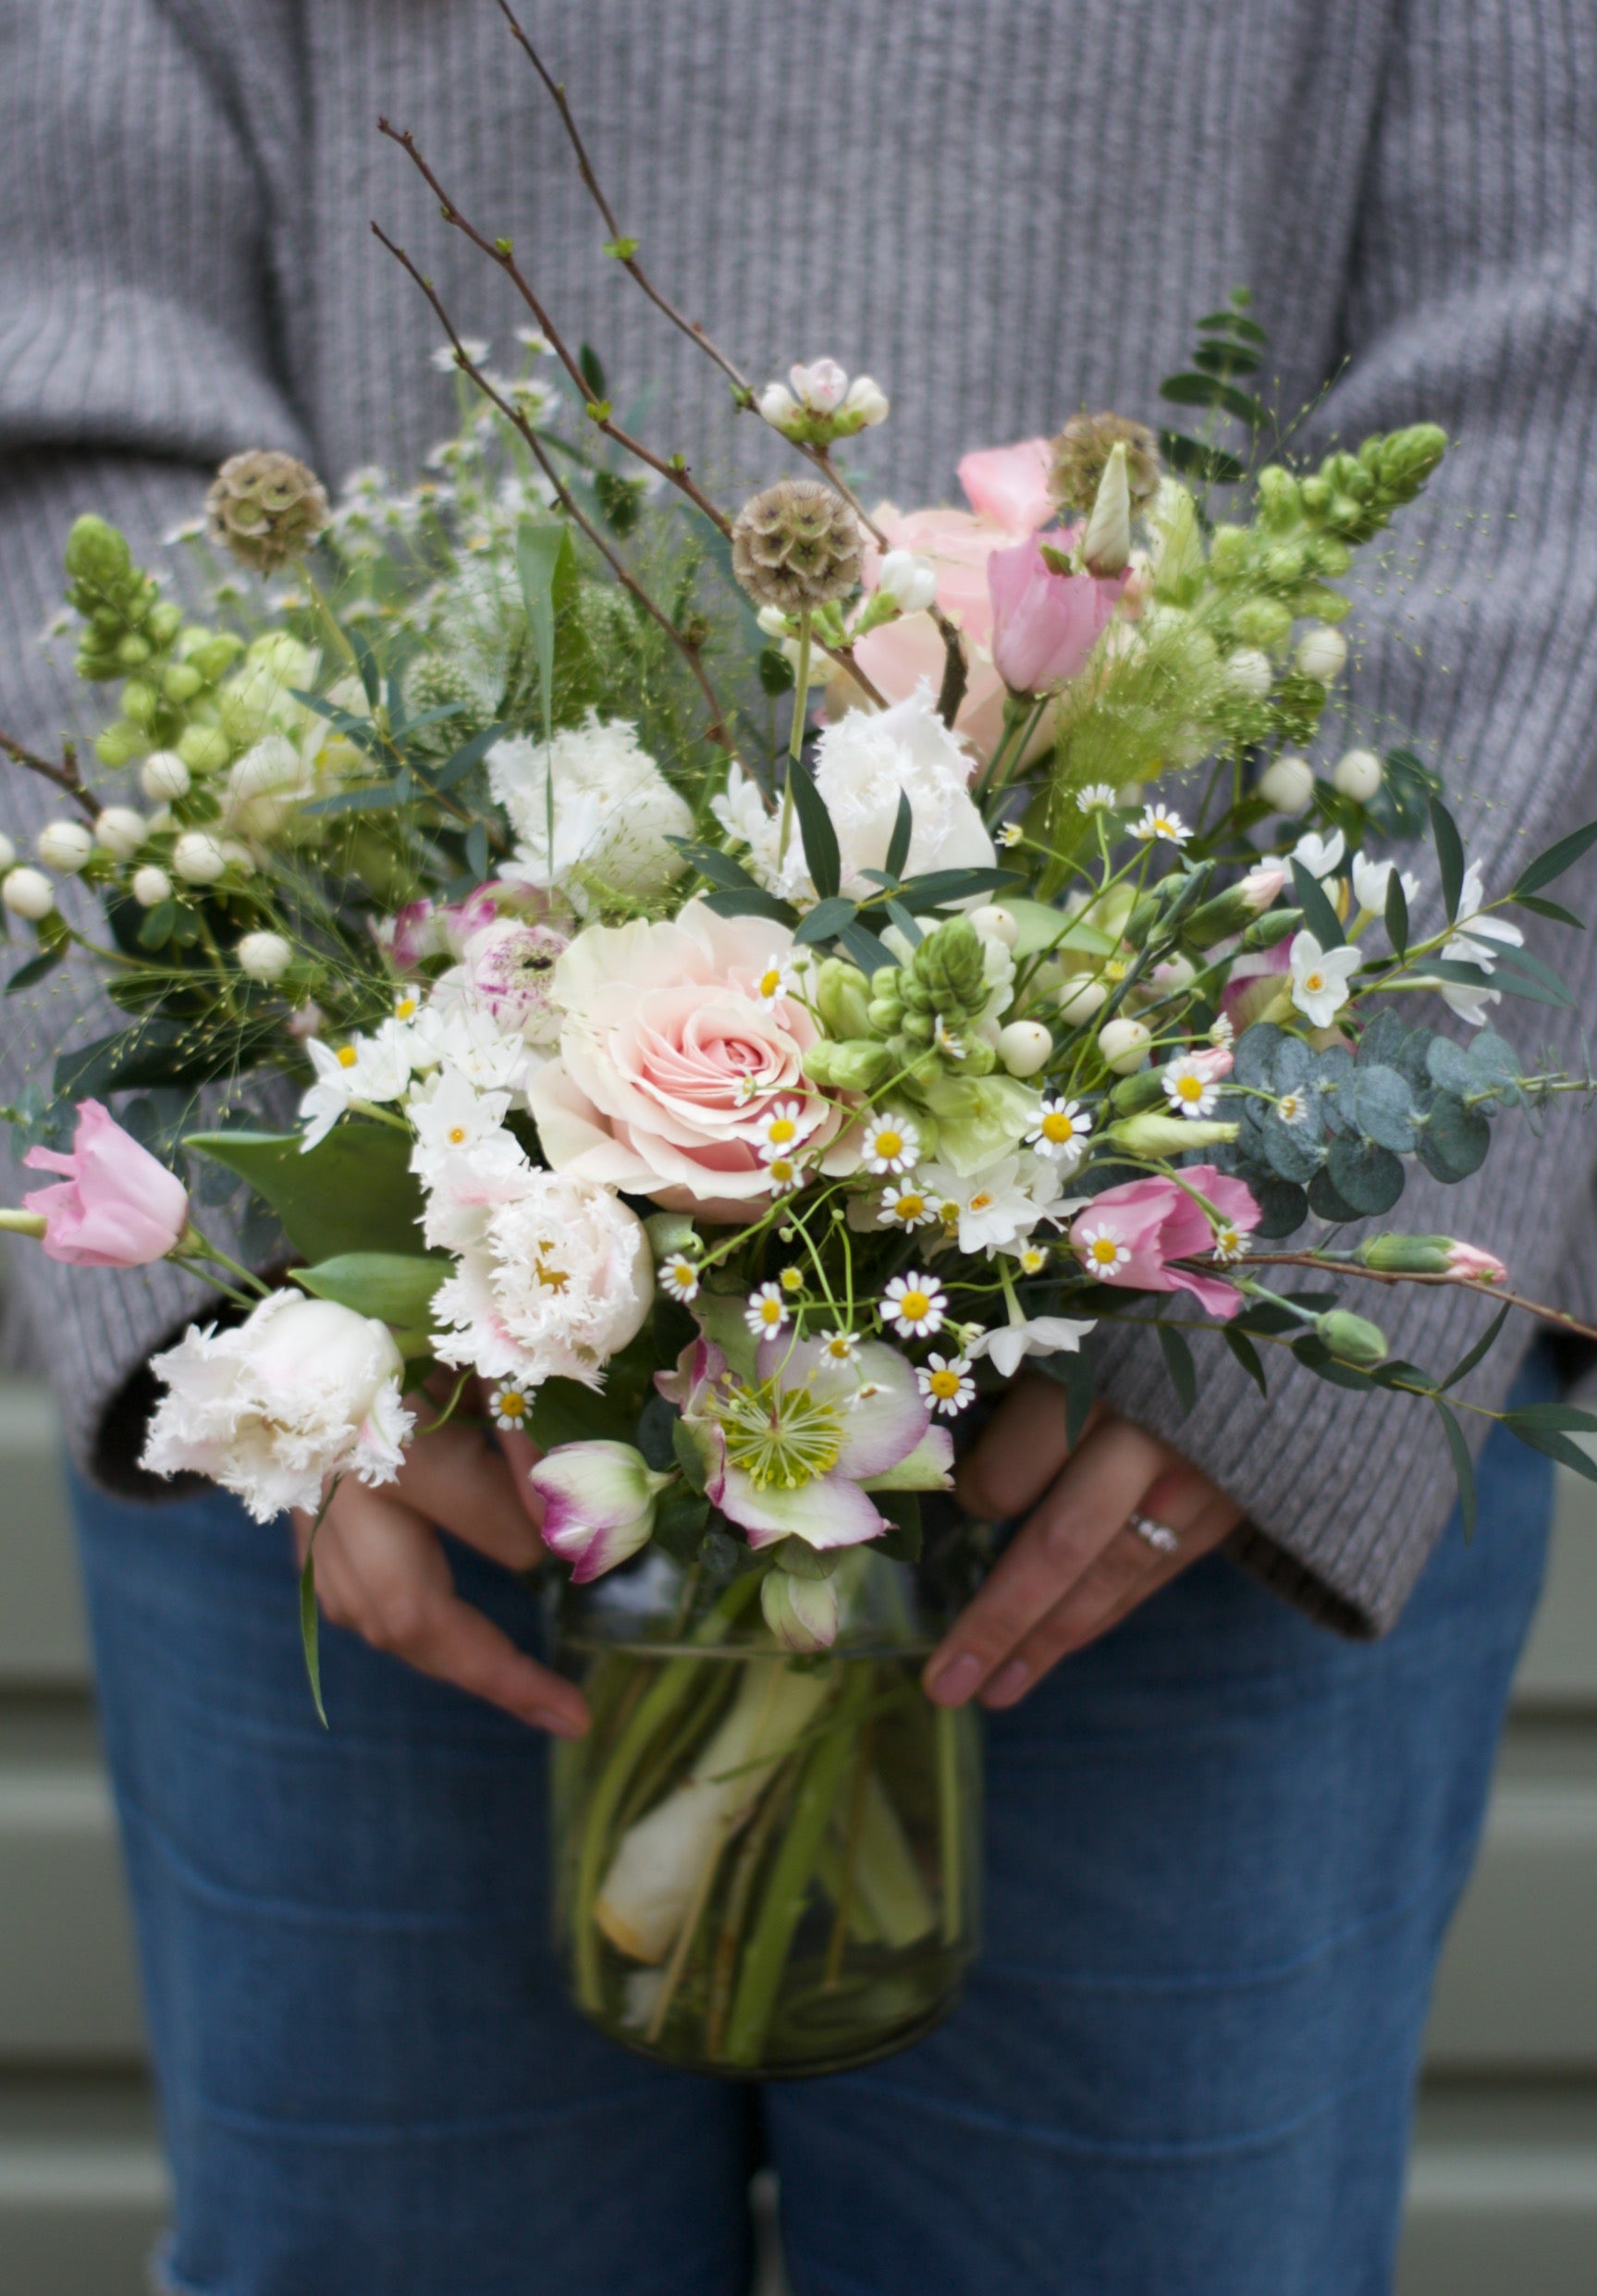 tigerlily florist guernsey flowers delivery wedding flower creative bouquet 